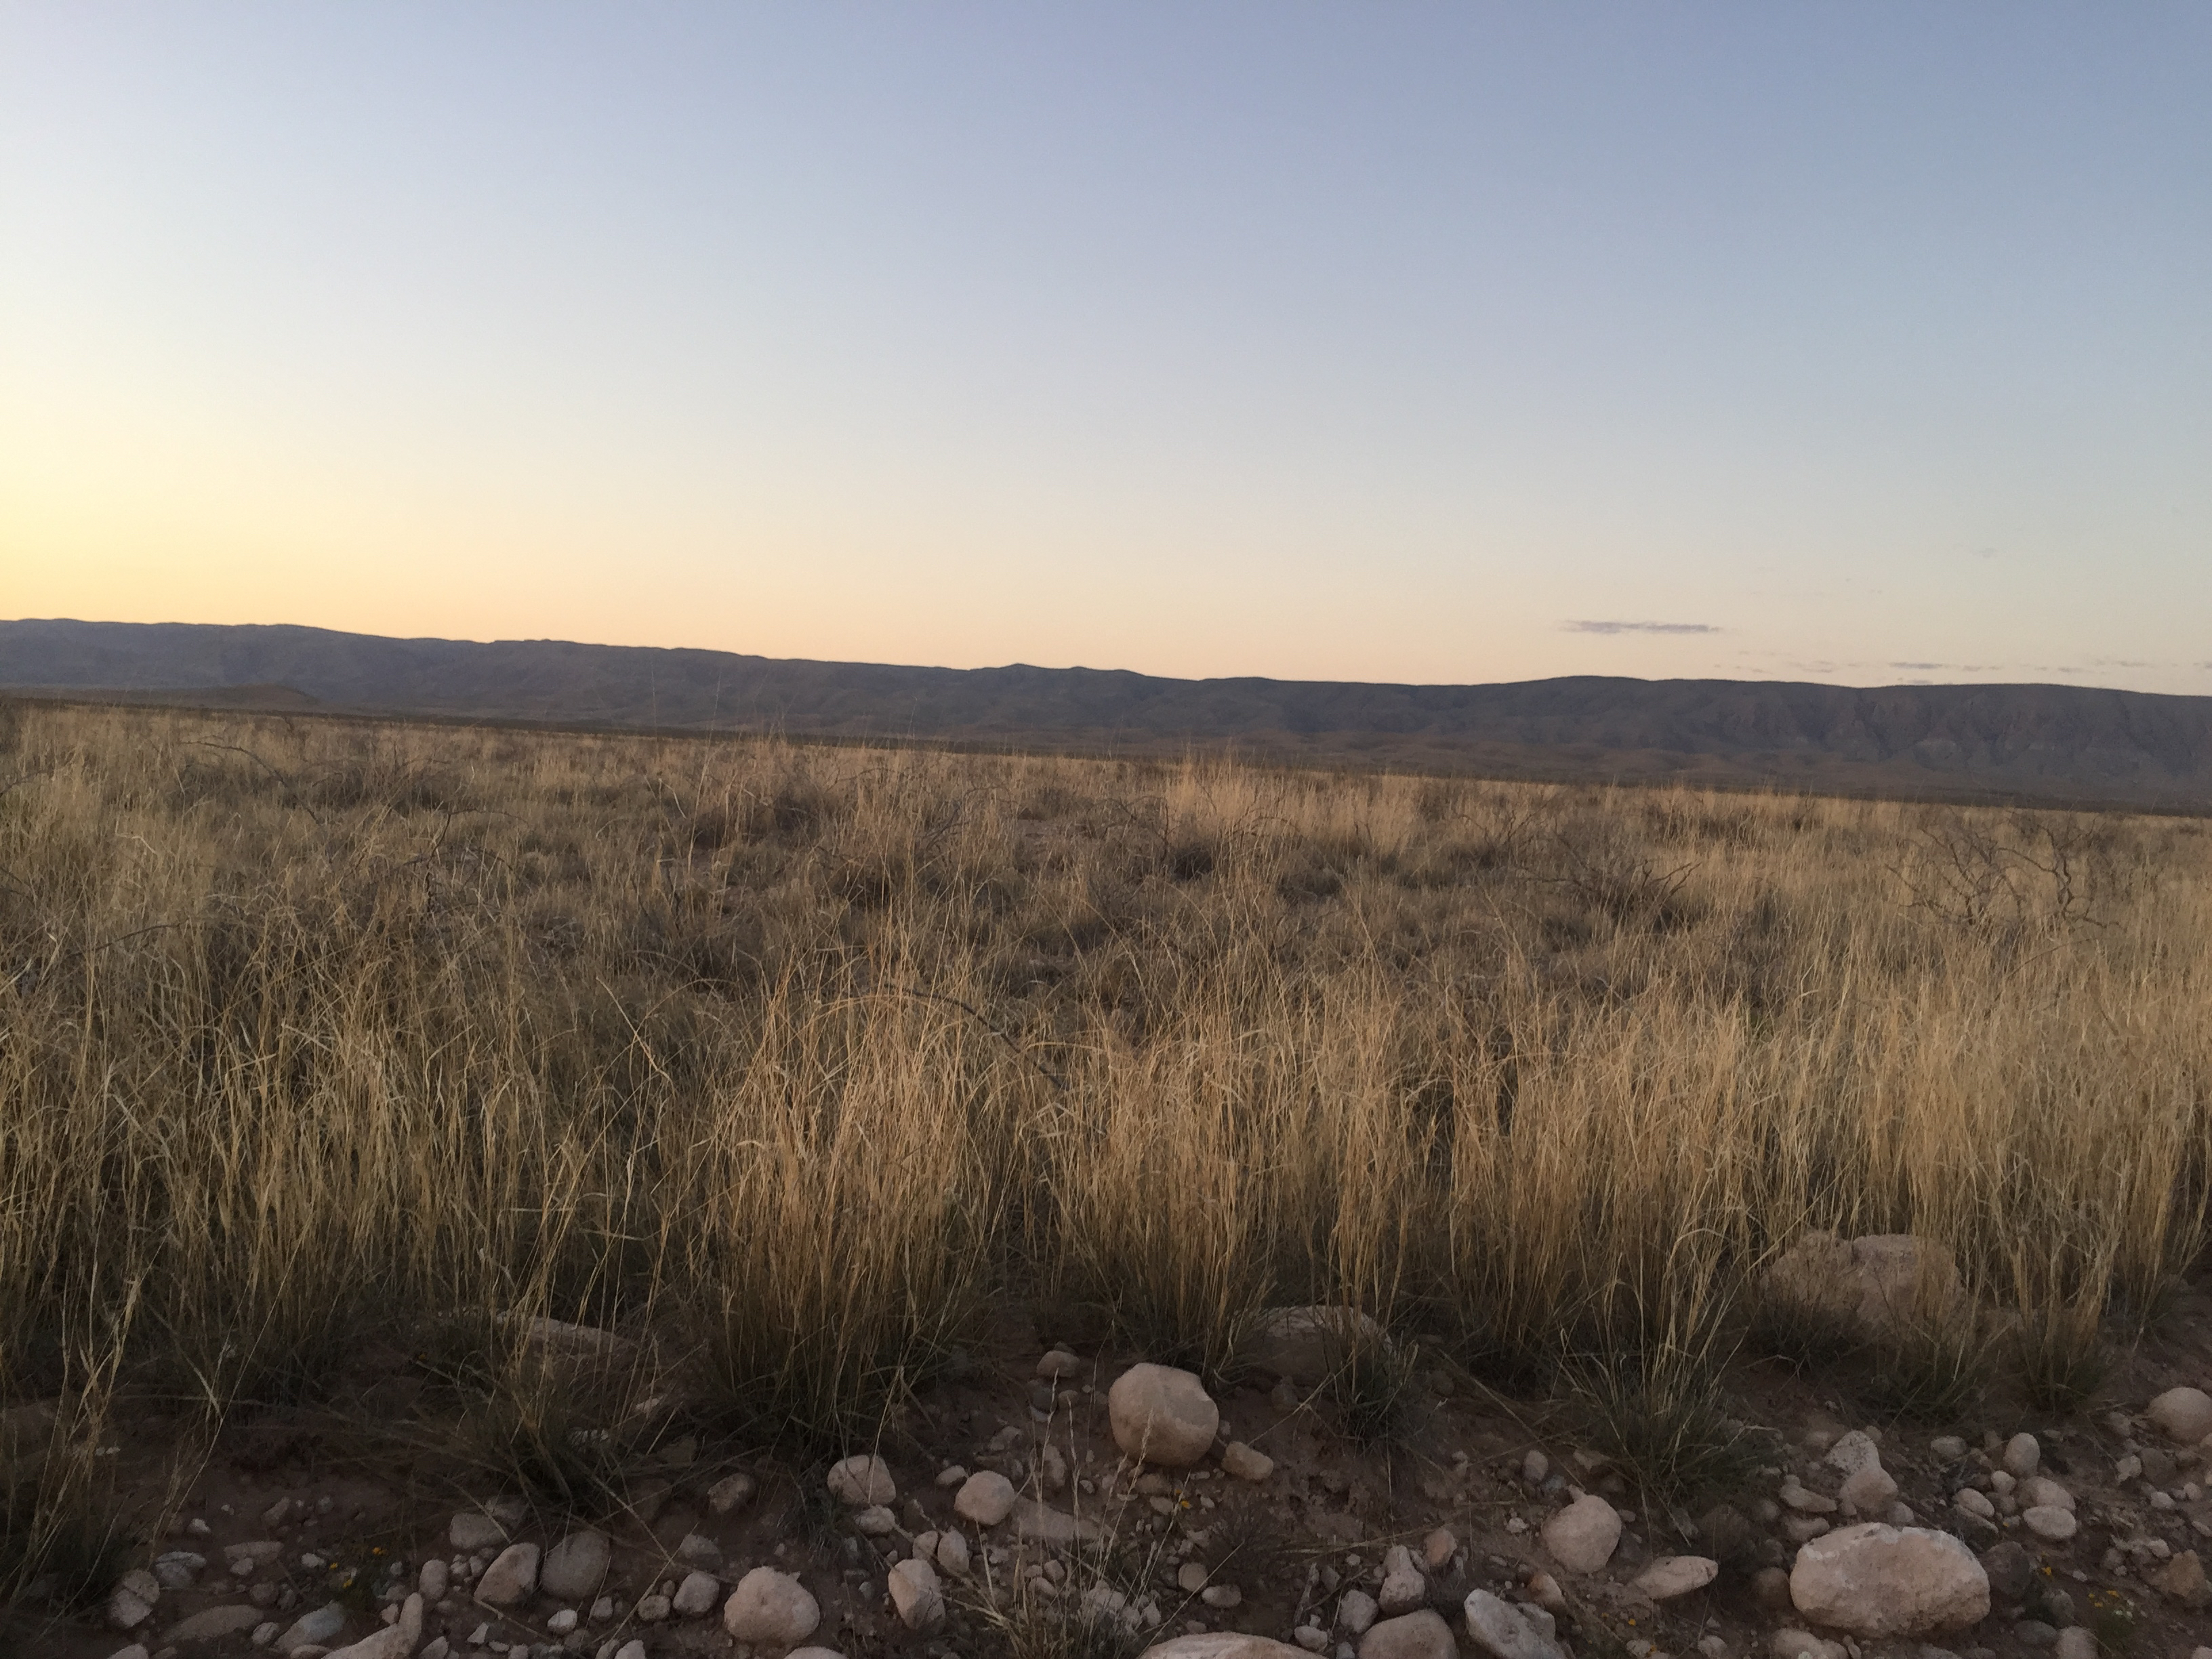 Mesa dropseed grassland habitat